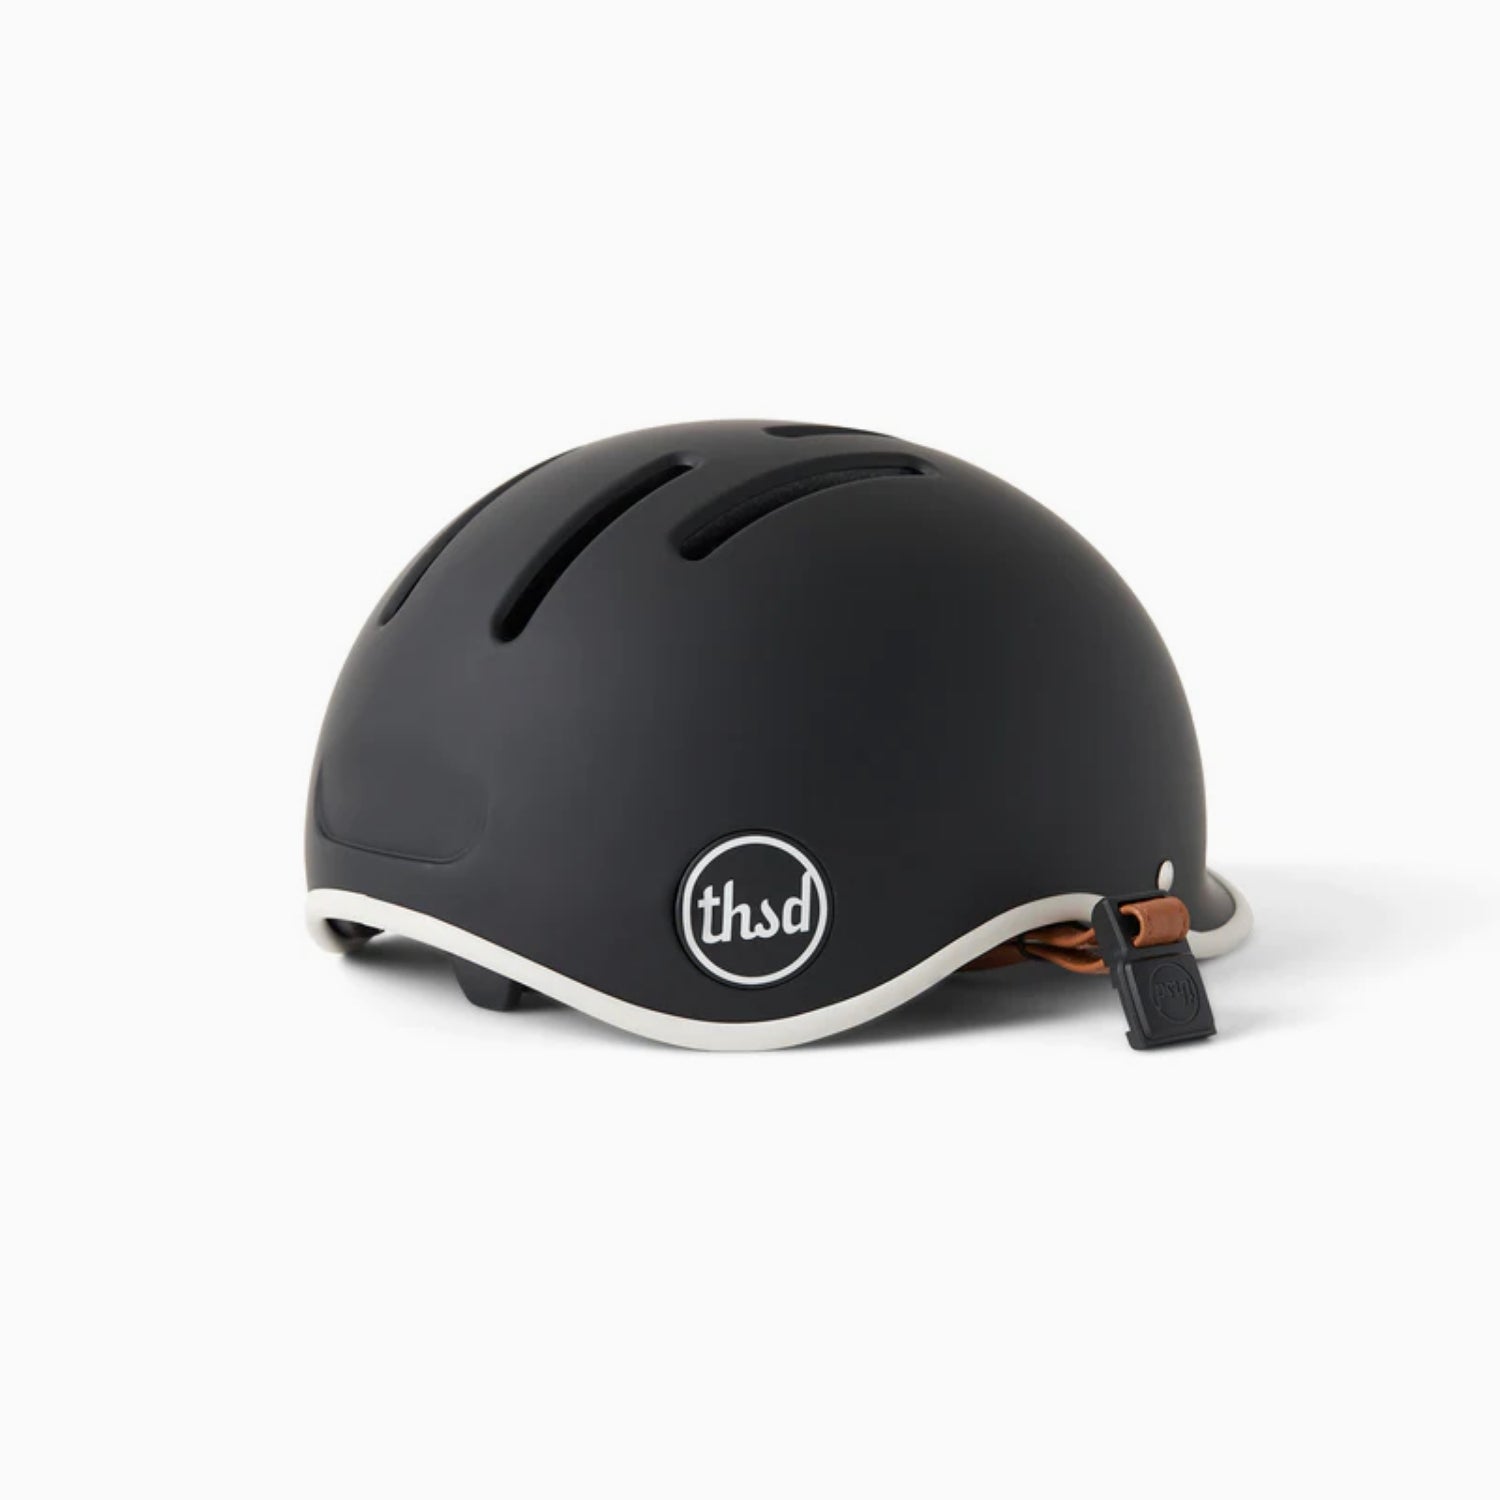 Heritage 2.0 Bike and Skate Helmet